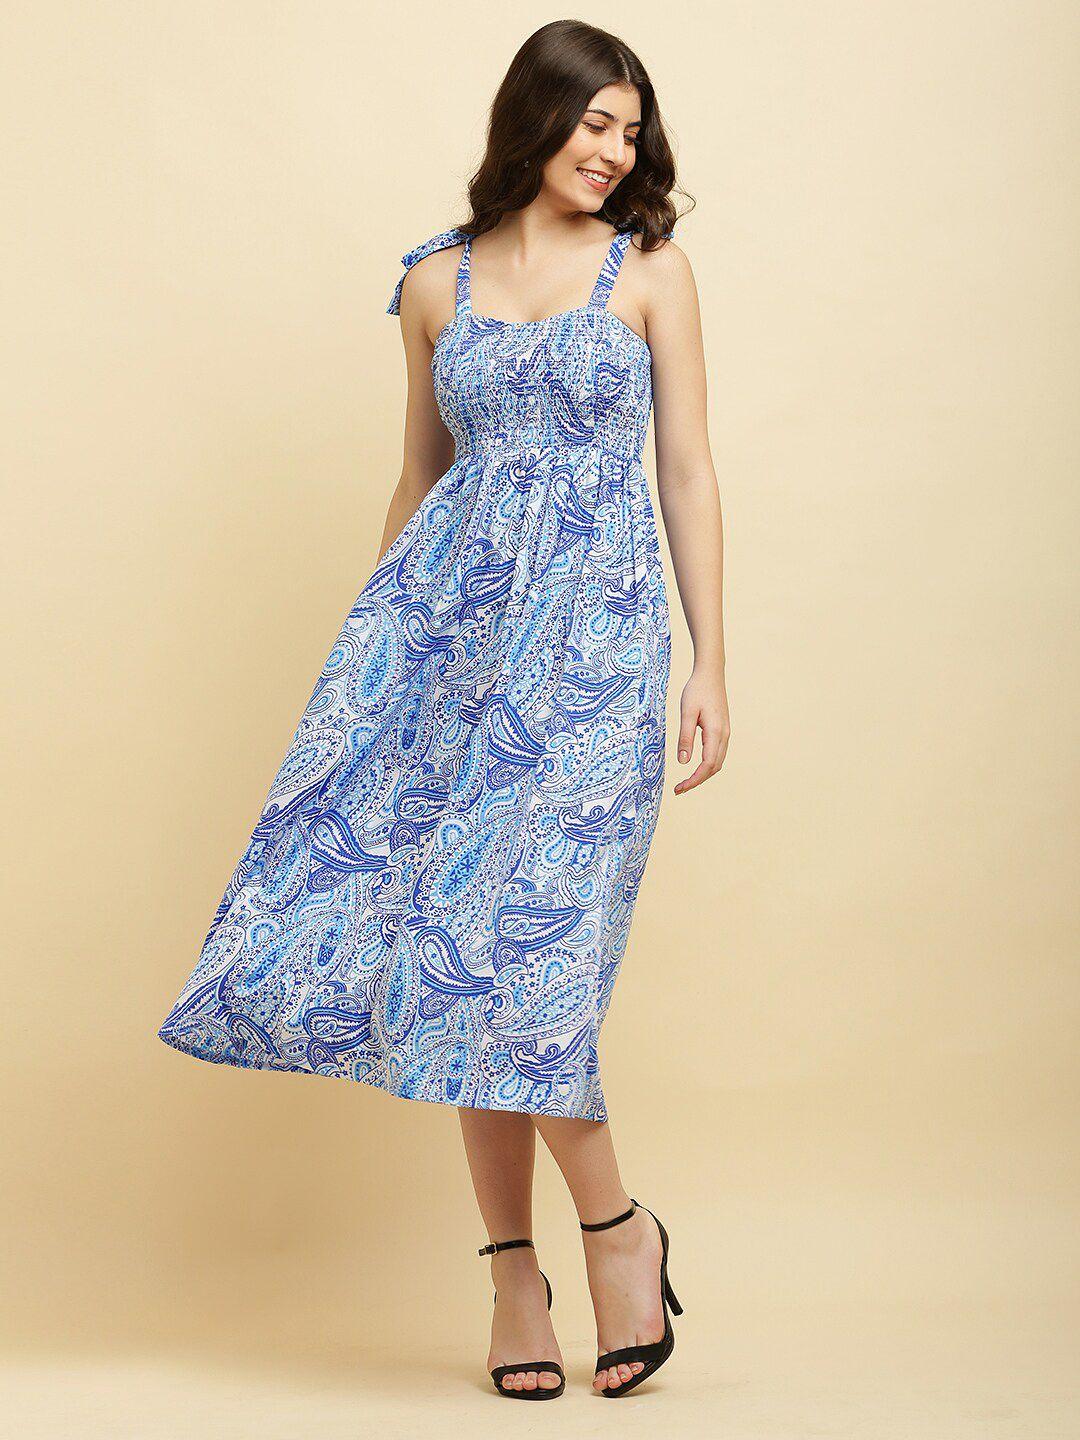 sqew-blue-floral-print-a-line-midi-dress